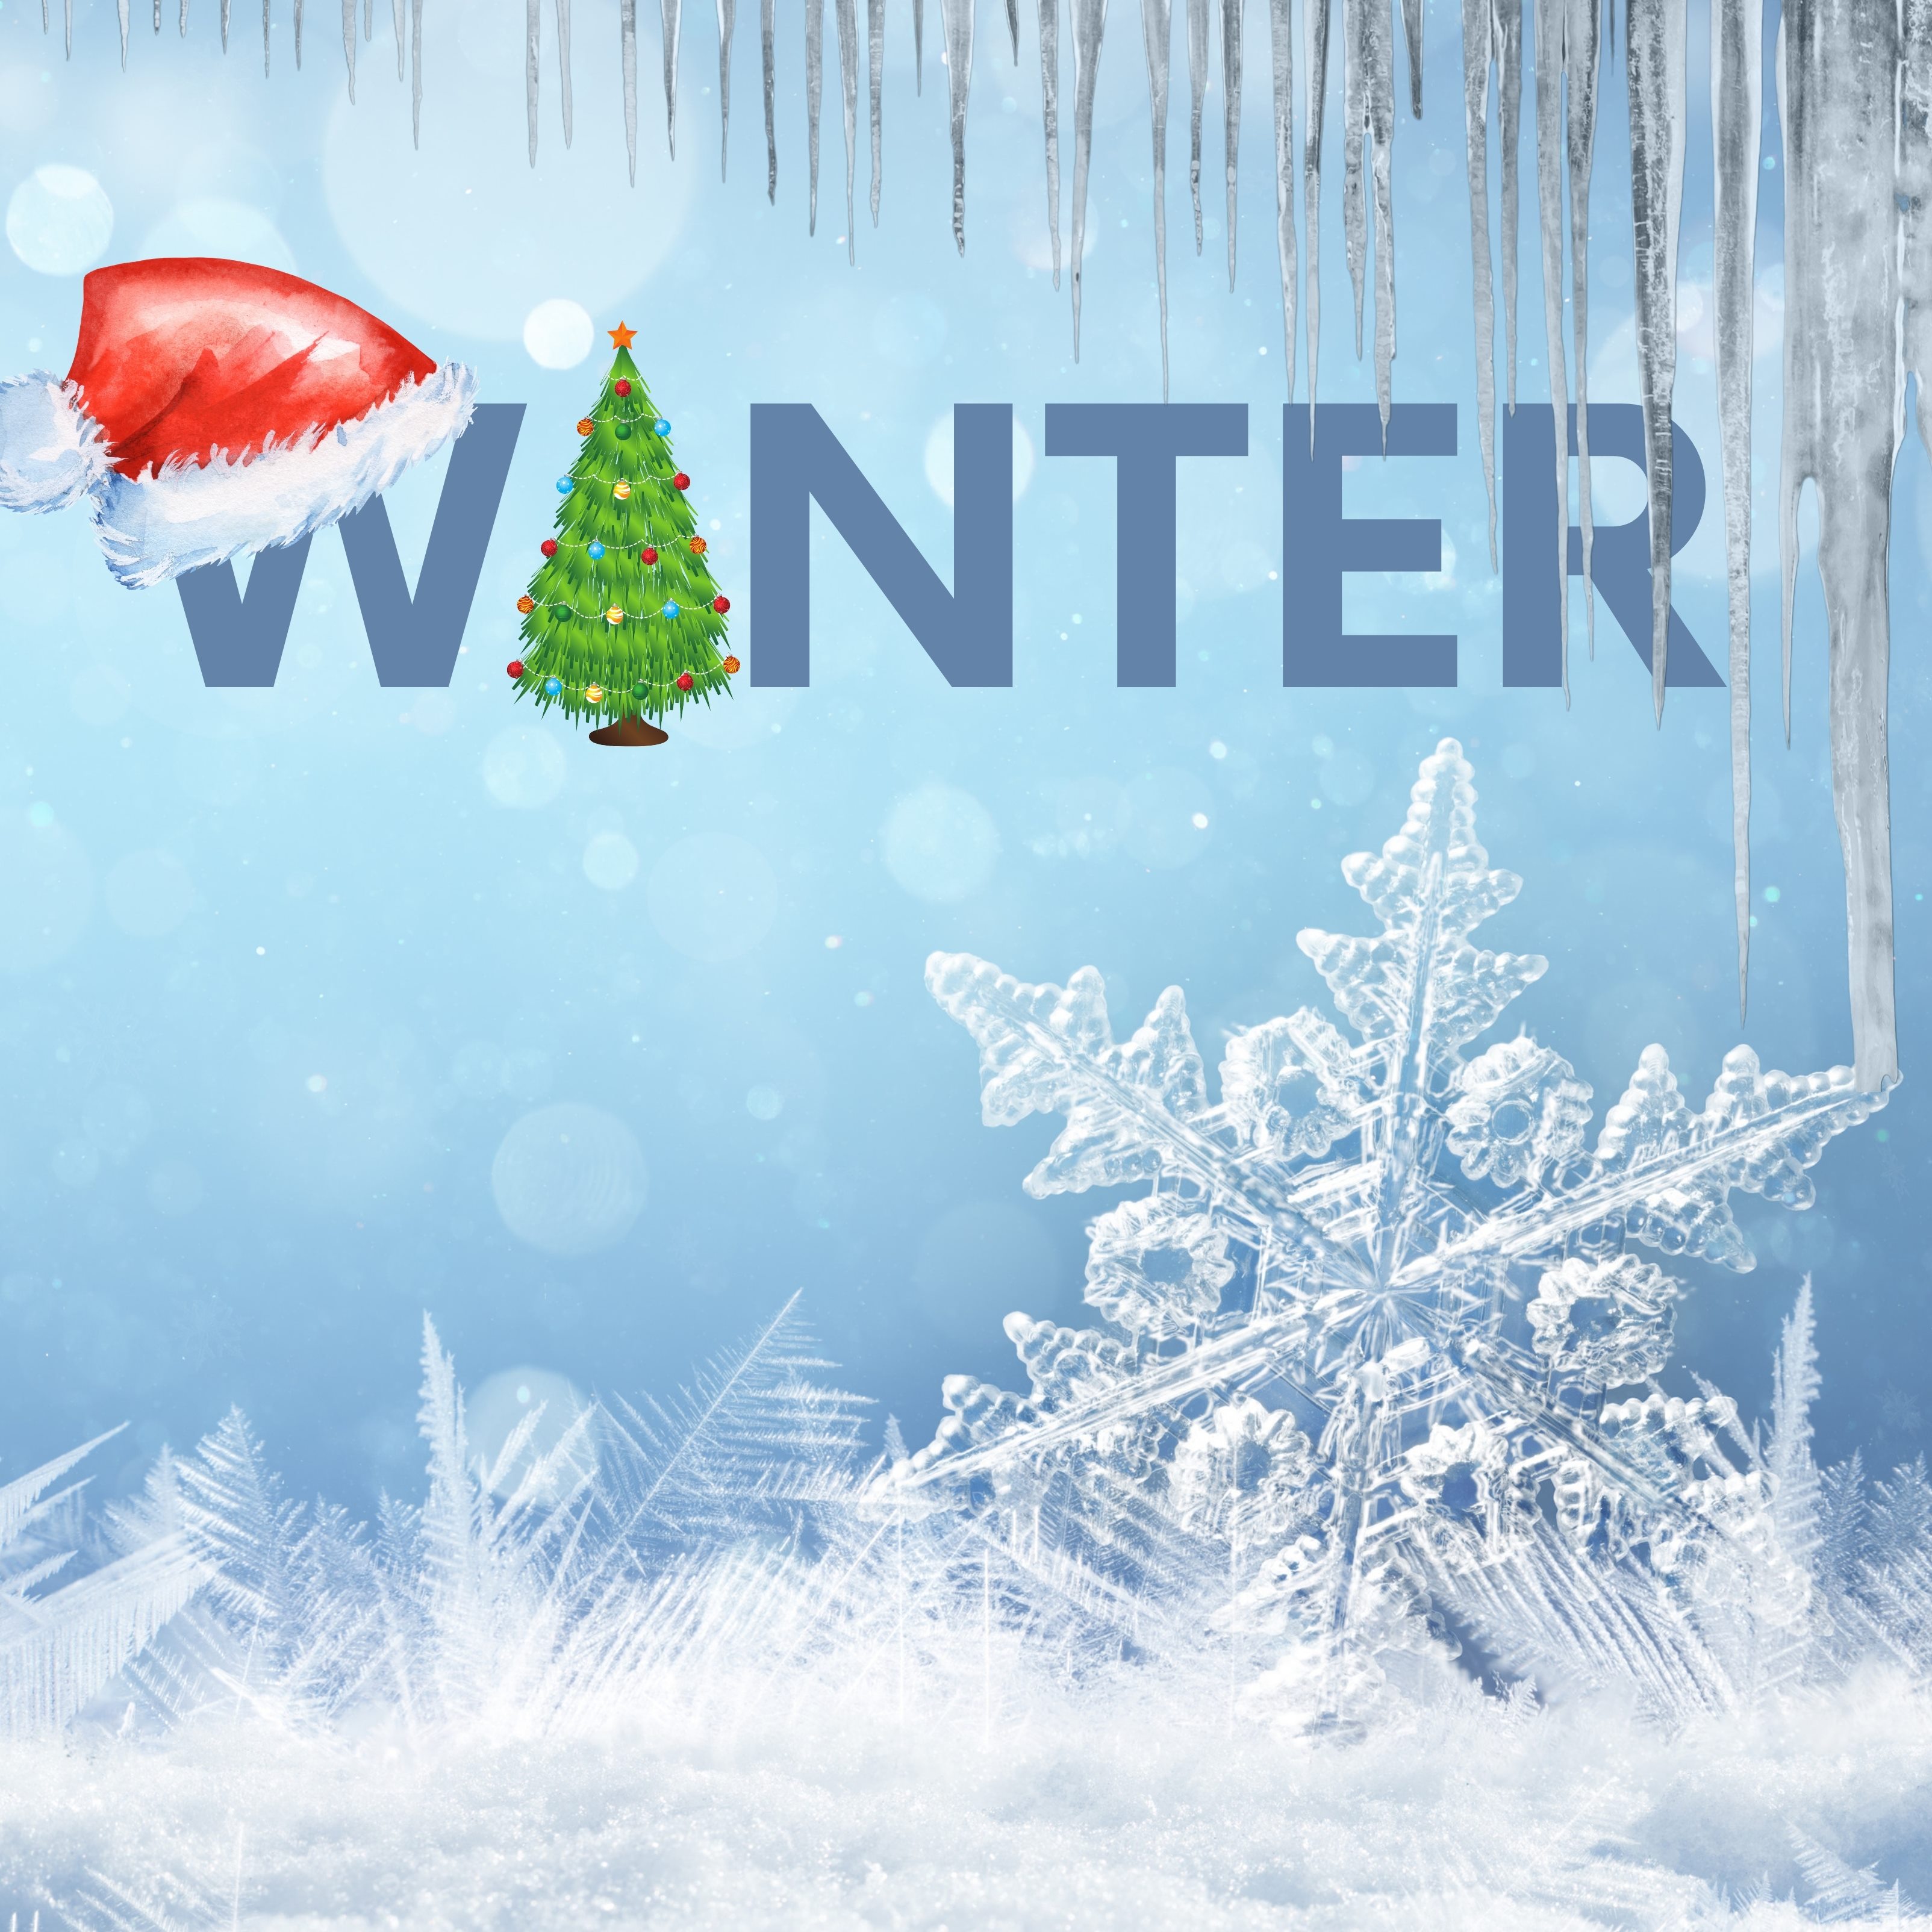 iPad Wallpapers Winter Snow Christmas Tree iPad Wallpaper 3208x3208 px